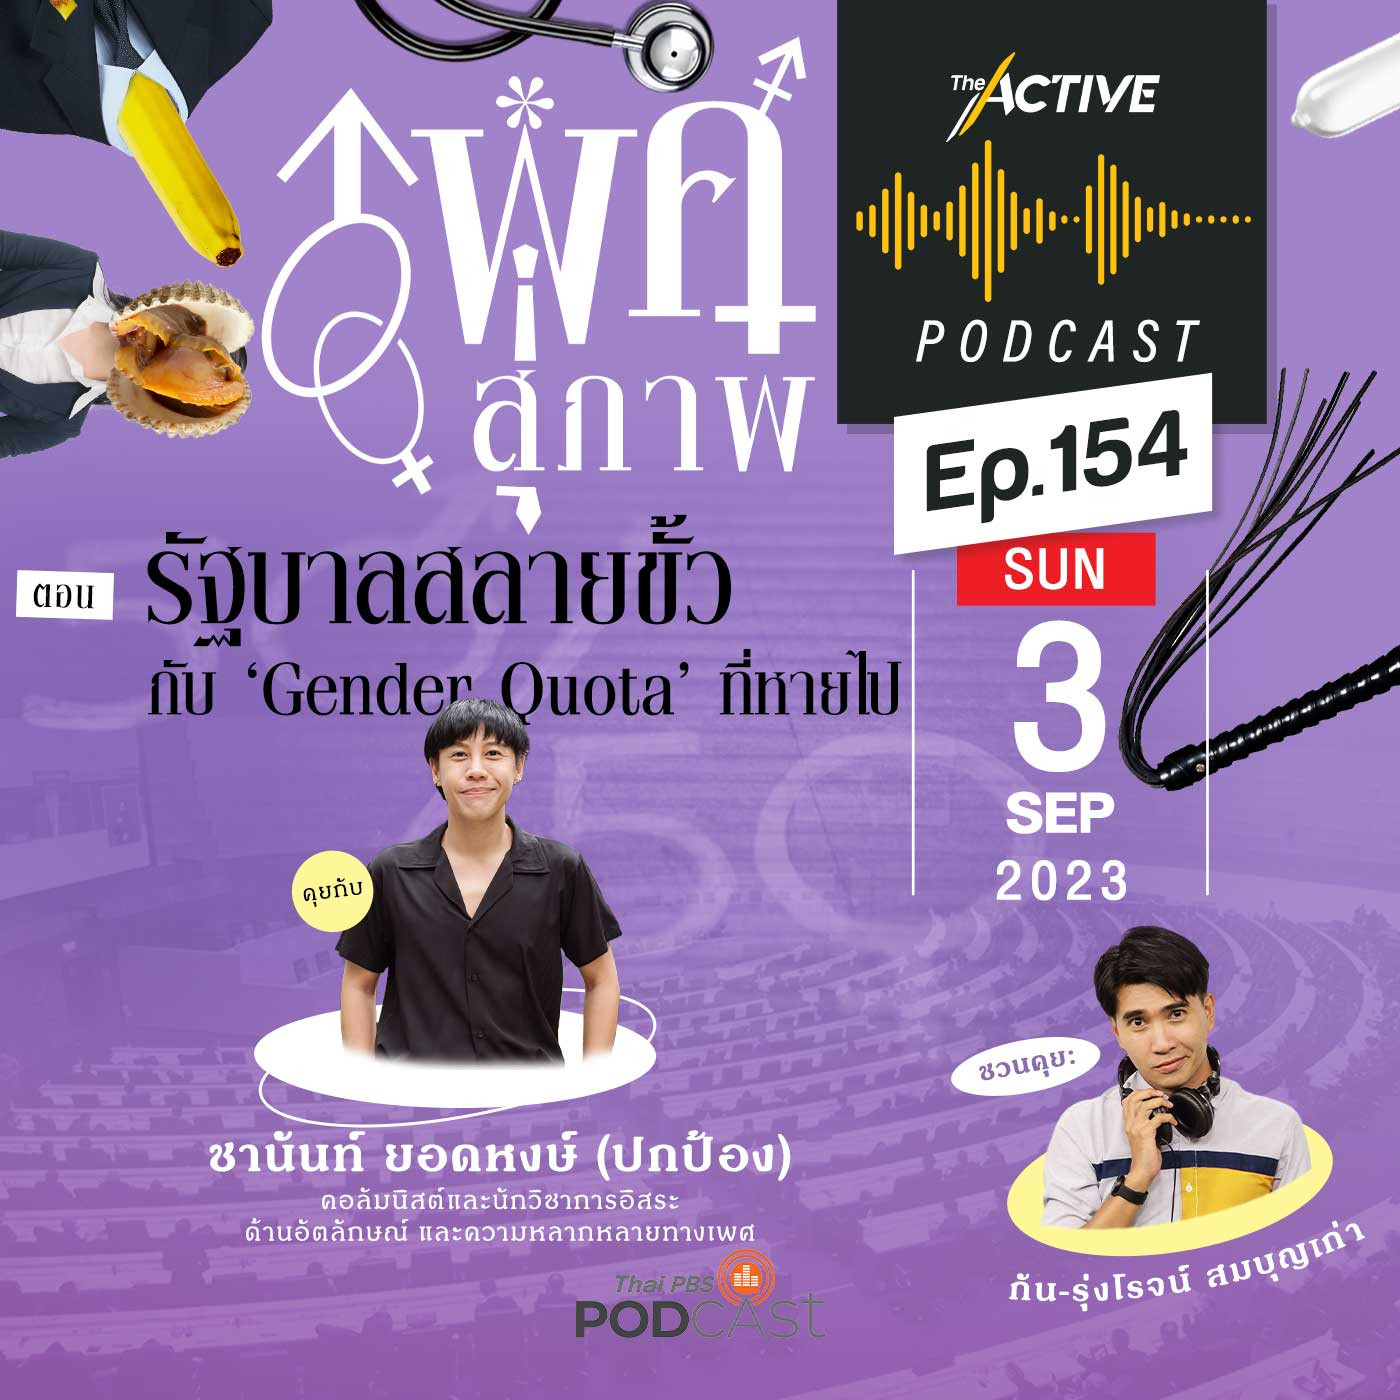 The Active Podcast EP. 154: รัฐบาลสลายขั้ว กับ Gender Quota ที่หายไป